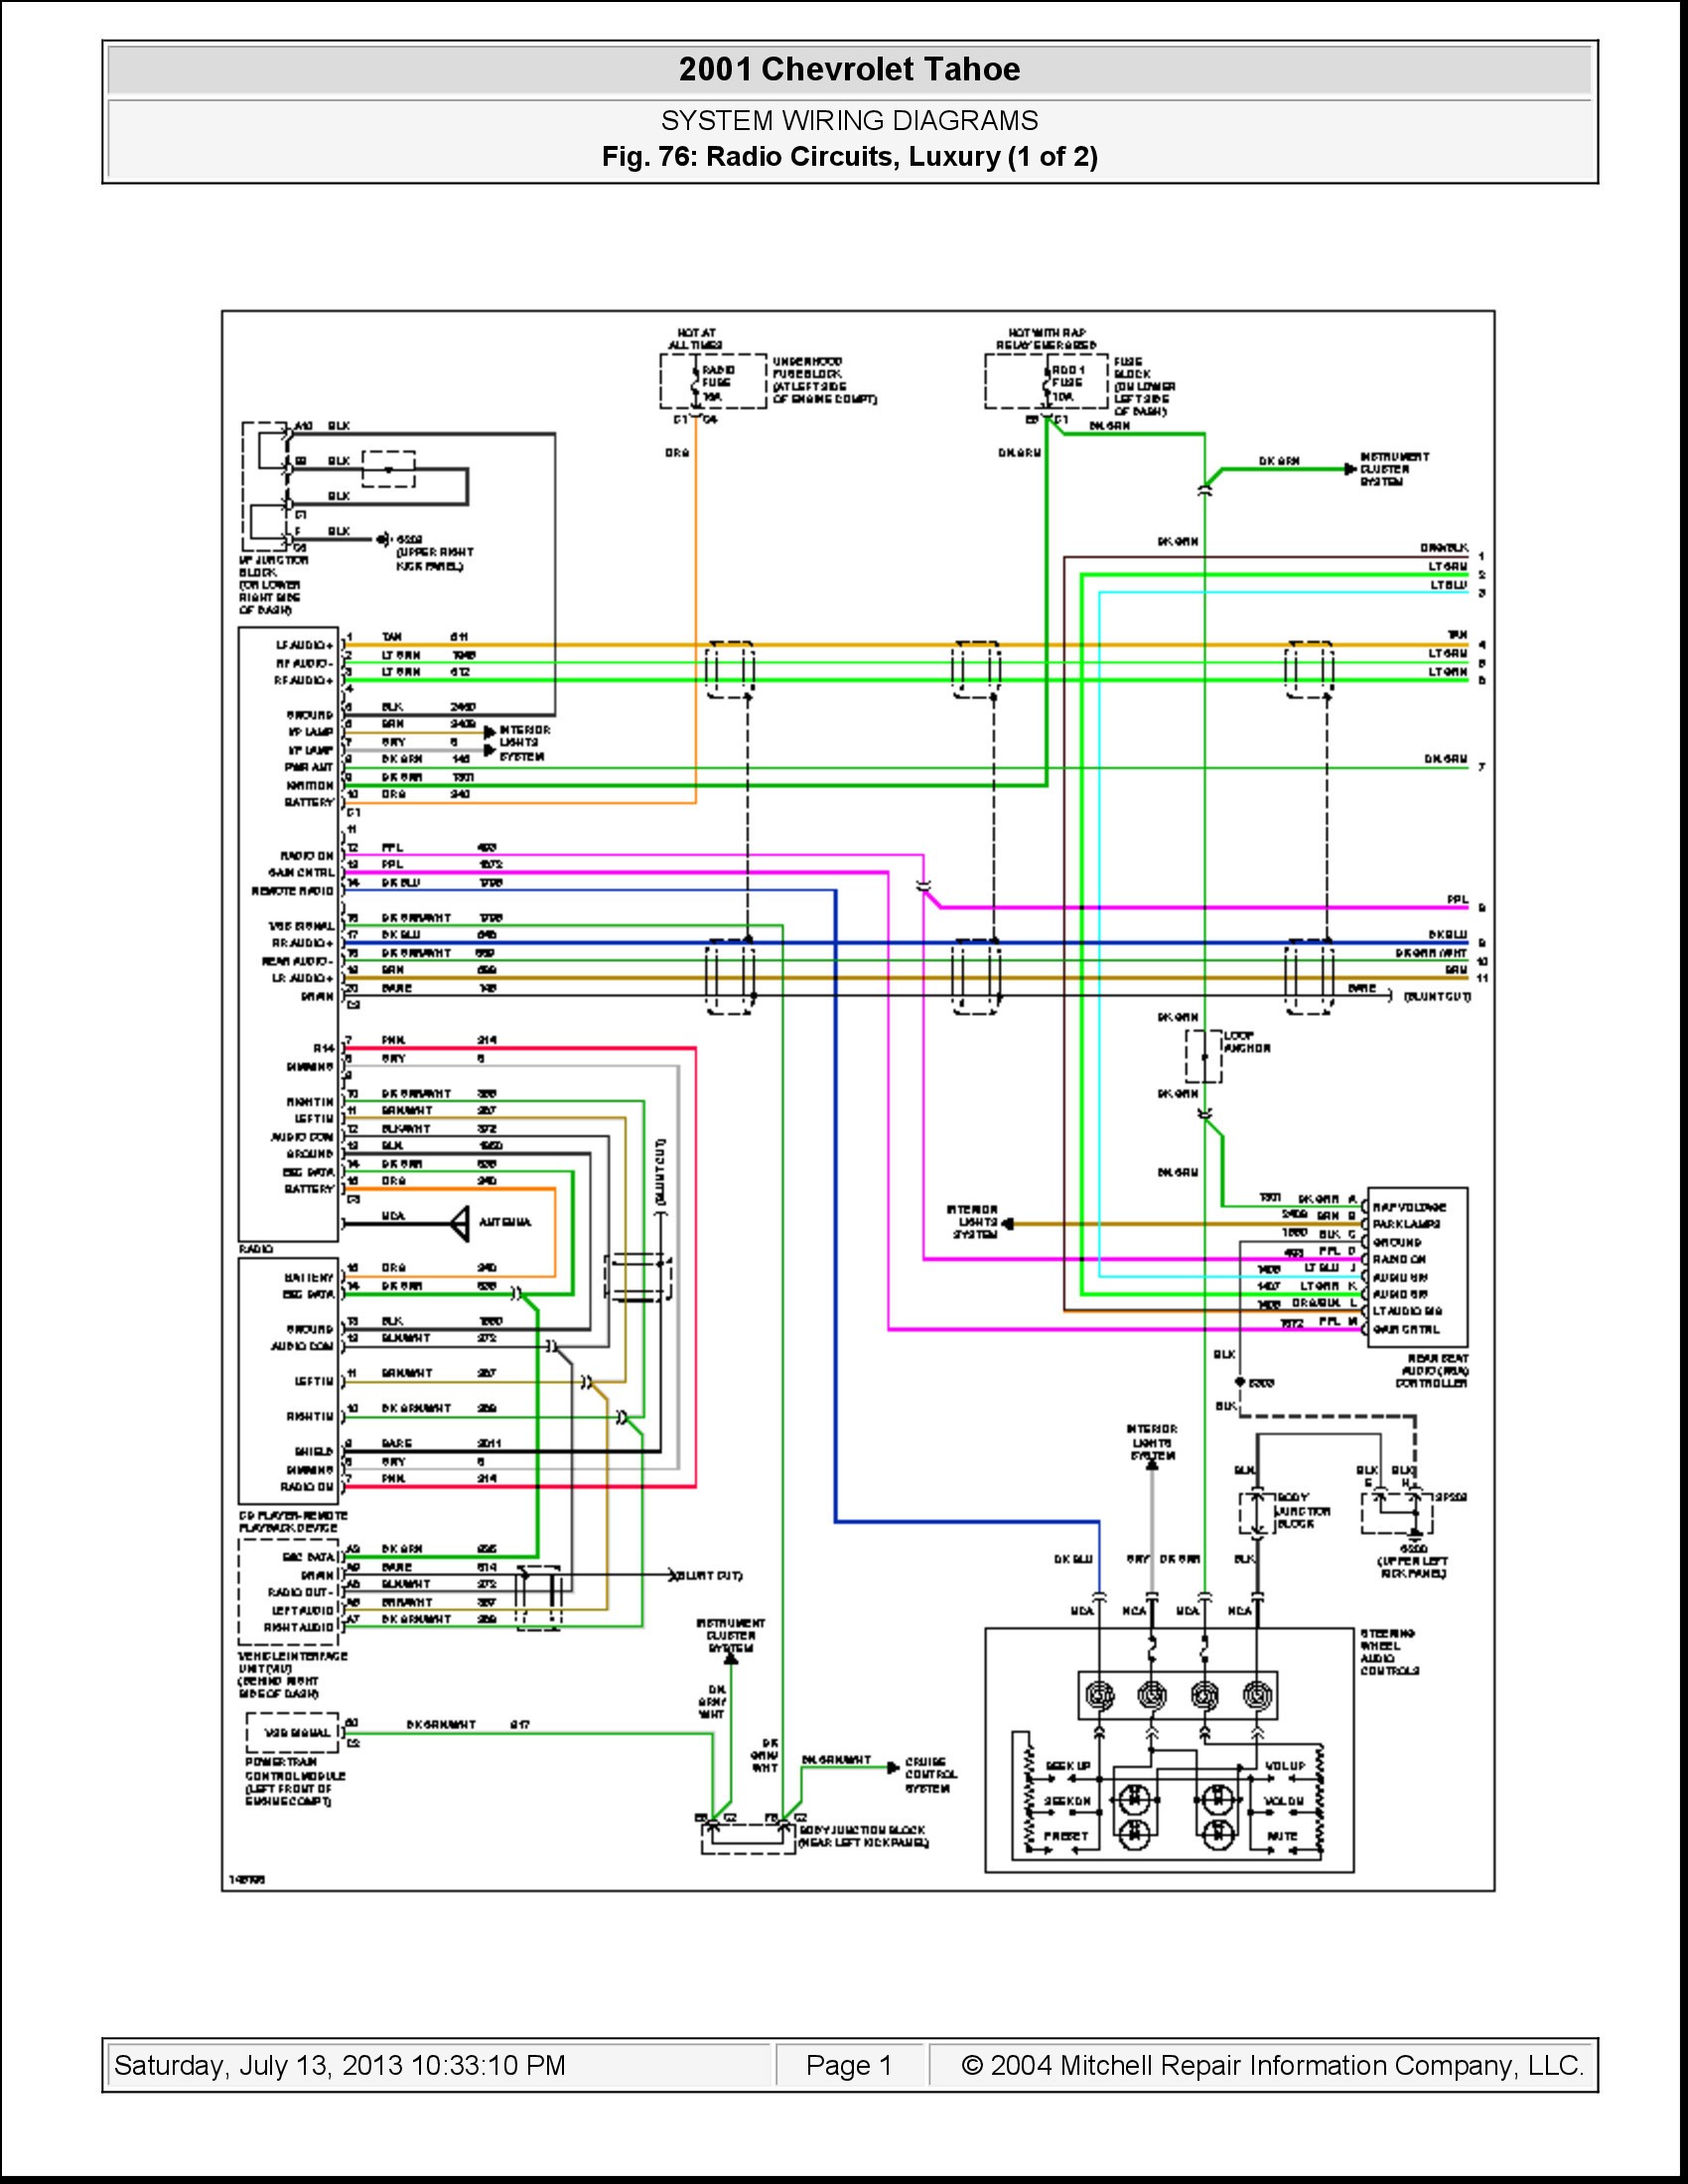 1999 Gmc Suburban Radio Wiring Diagram from mainetreasurechest.com